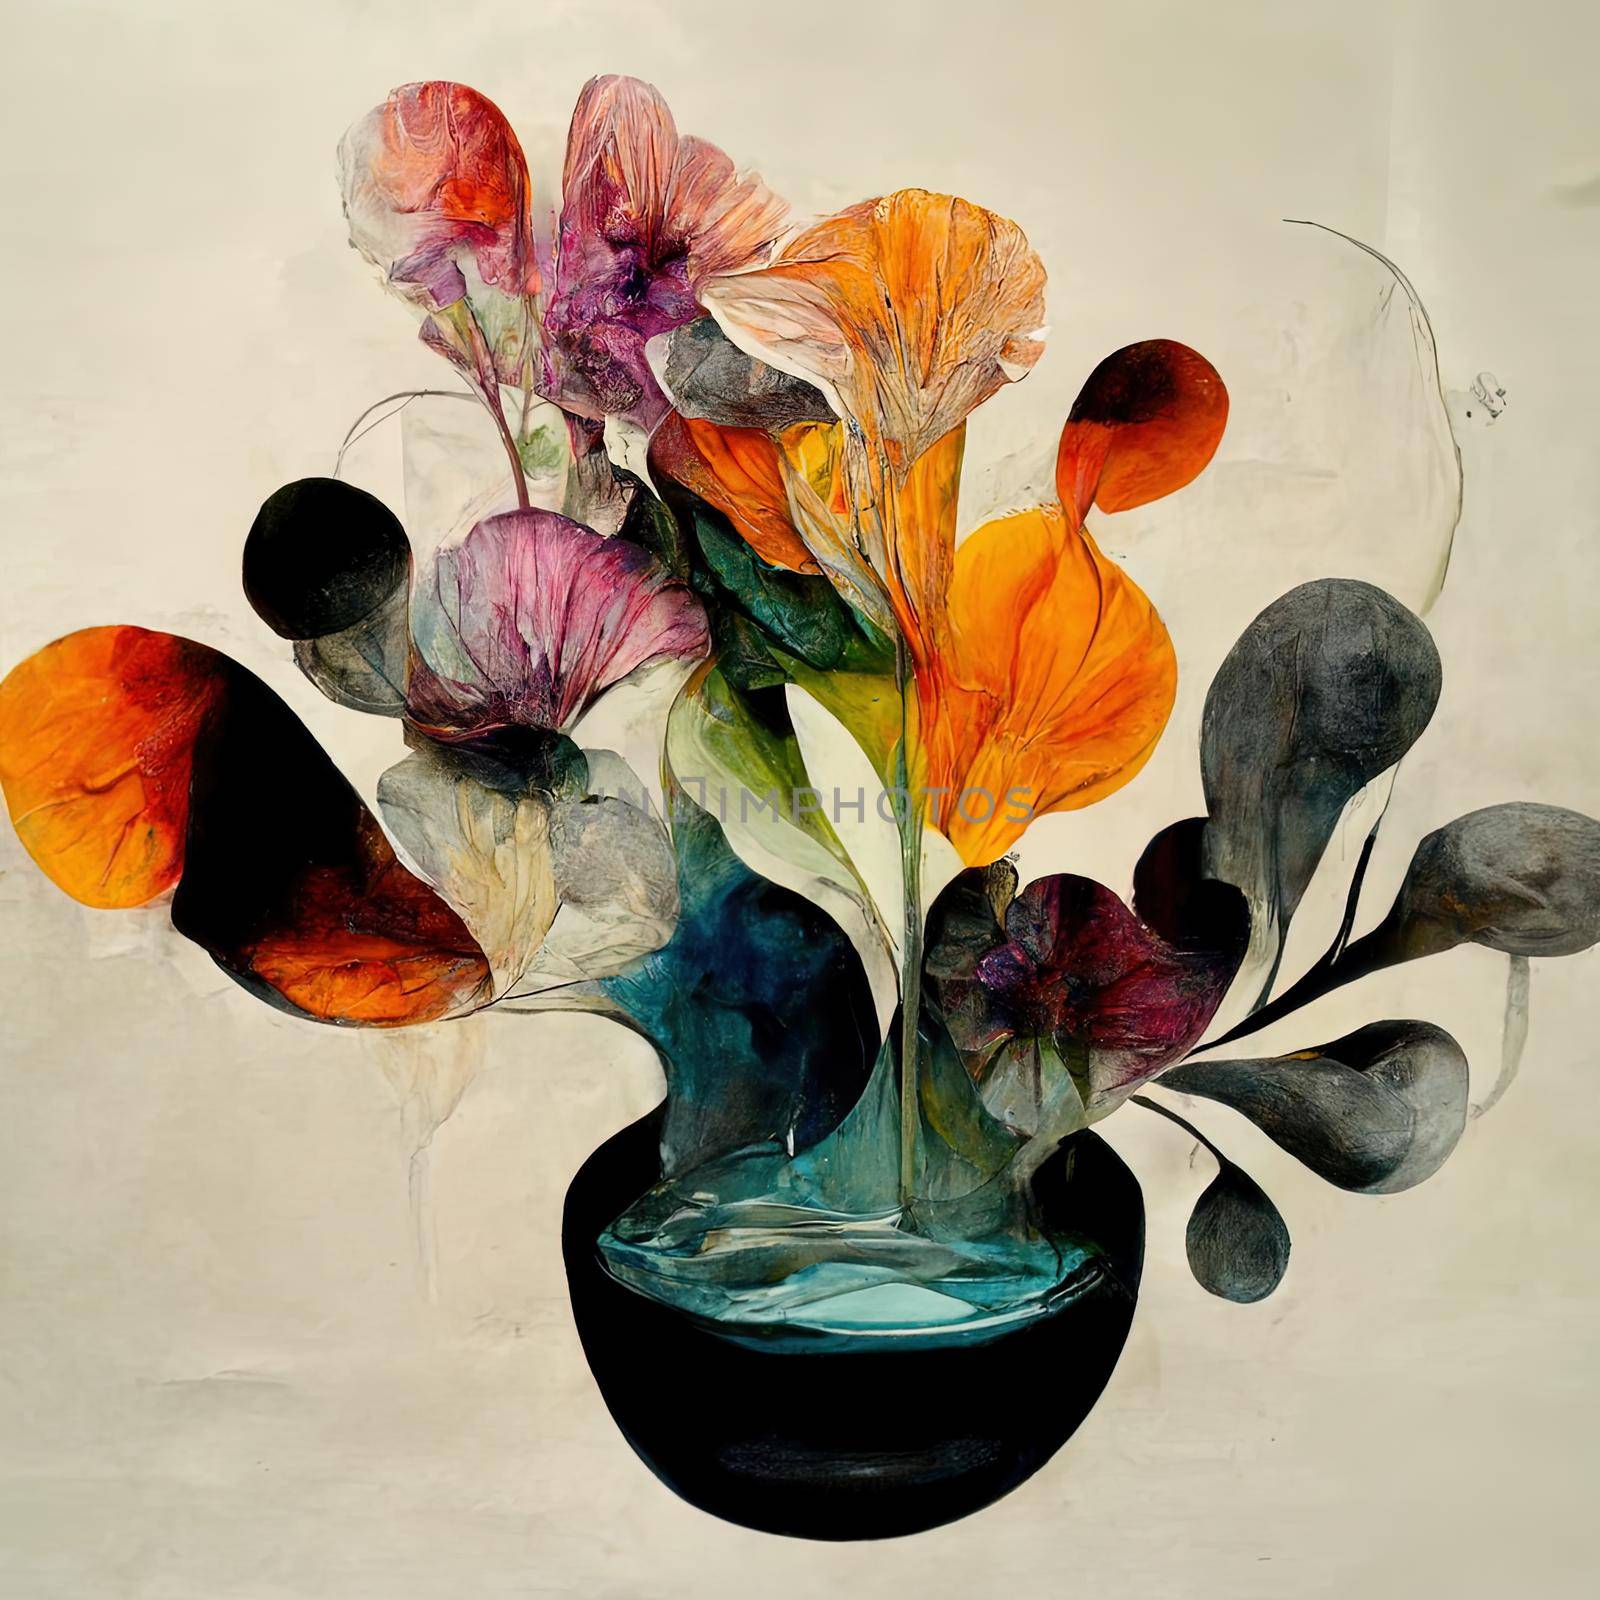 Arrangement of flowers, liquid splashes and organic shapes. High quality 3d illustration